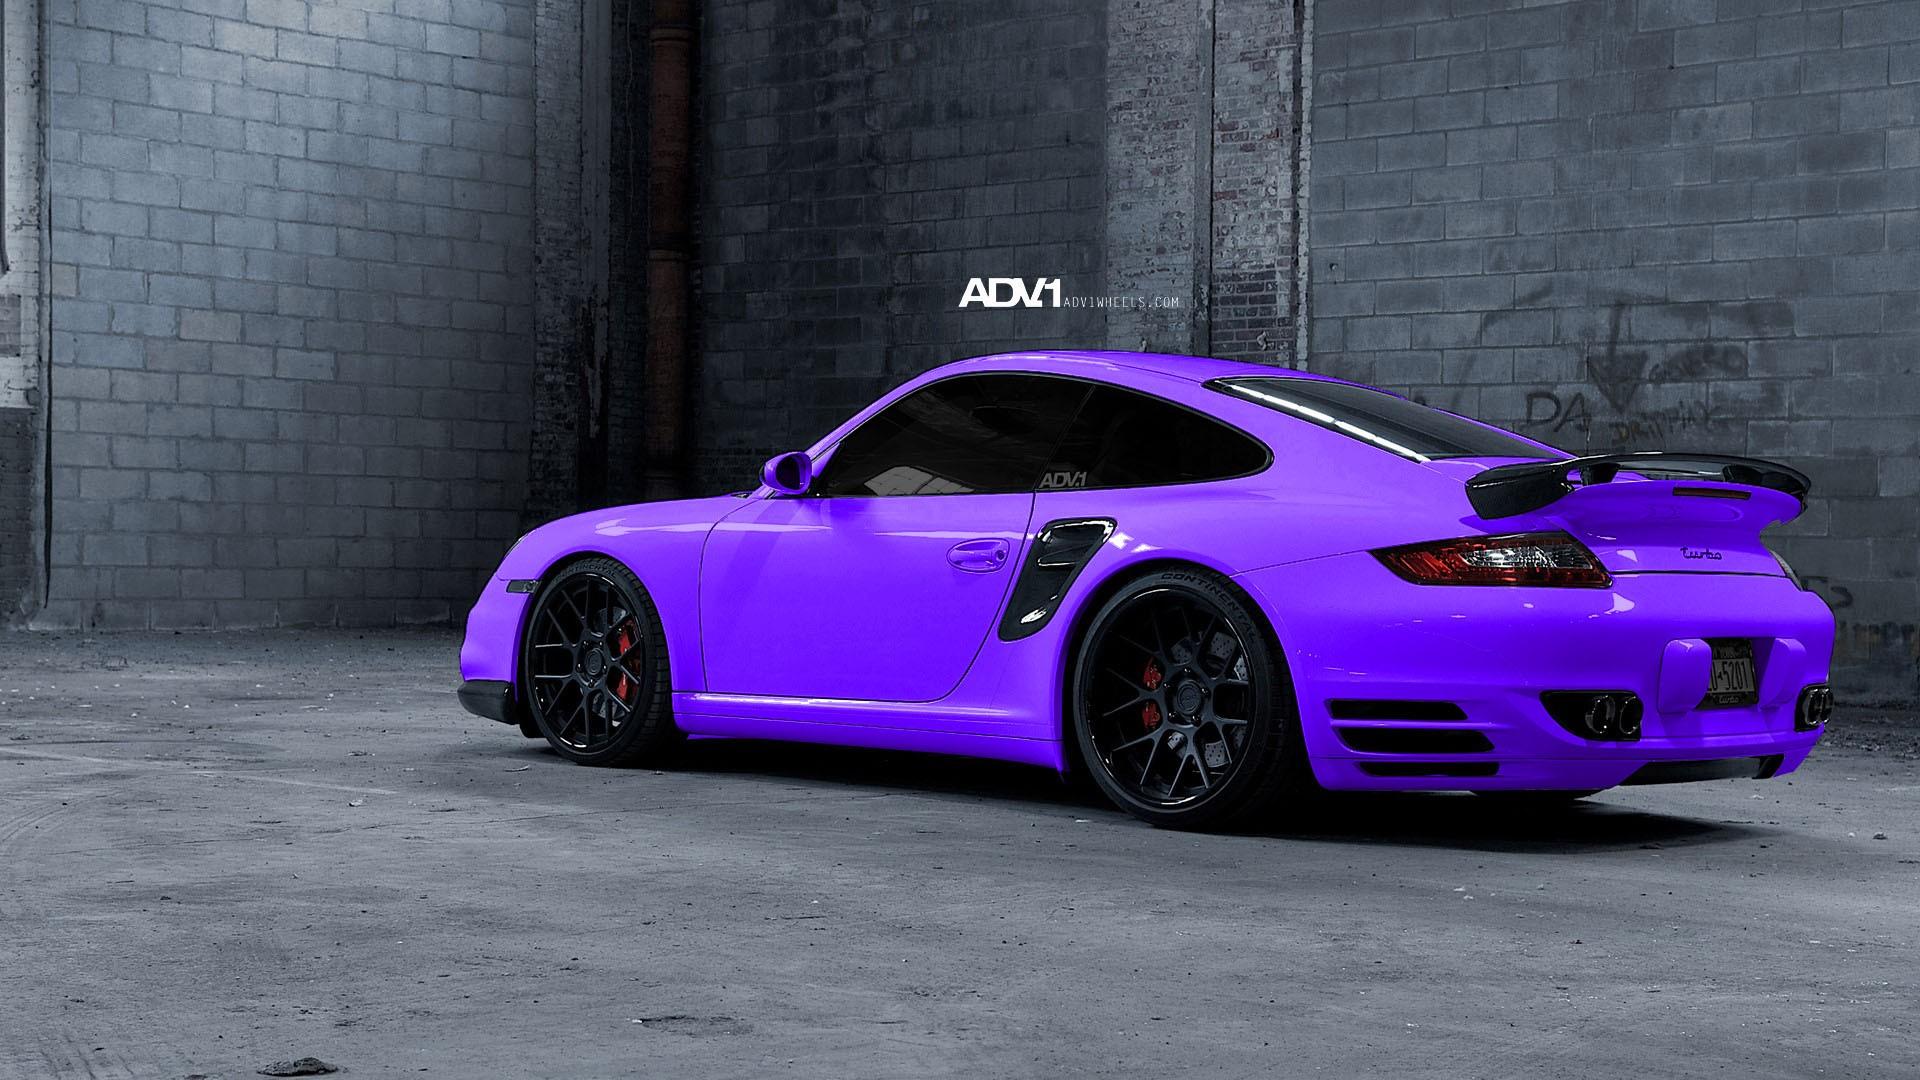 Porsche, cars, purple, turbo, Porsche ADV Porsche 911 Turbo